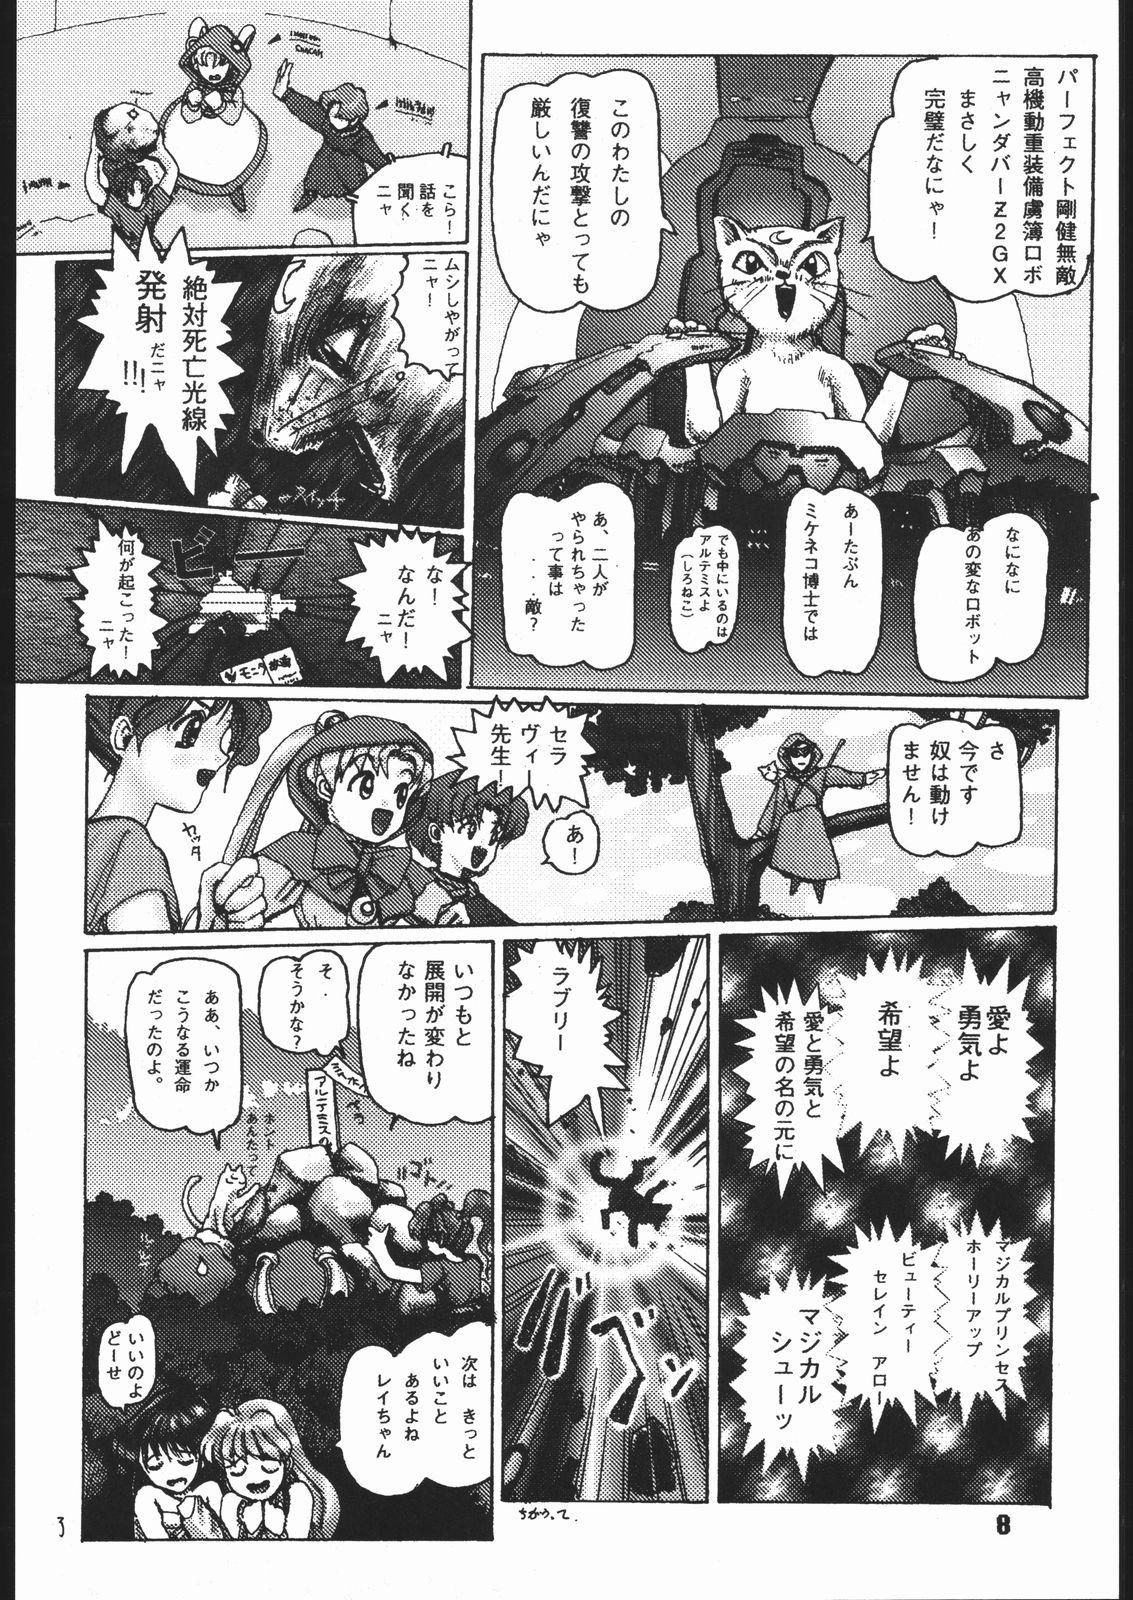 Doublepenetration miracle romance 3 - Sailor moon Tenchi muyo Lick - Page 9